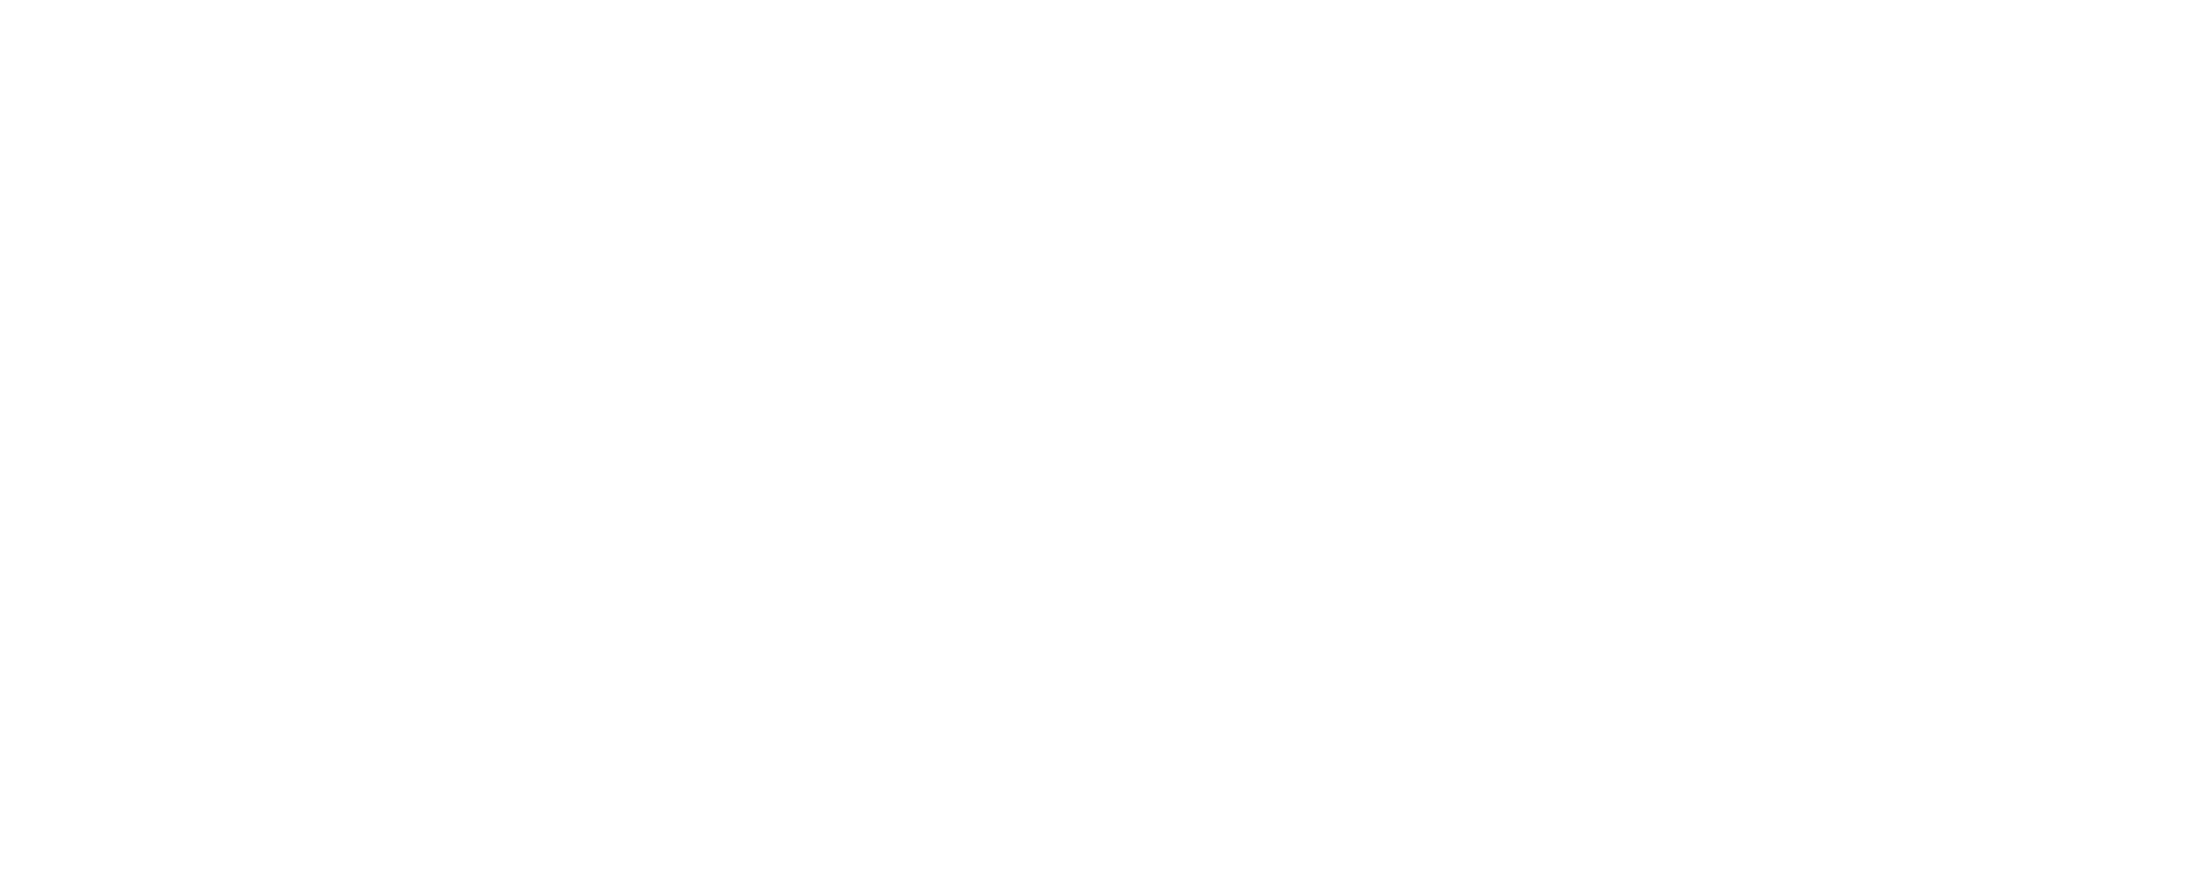 Format uwtuin logo wit_hoveniers